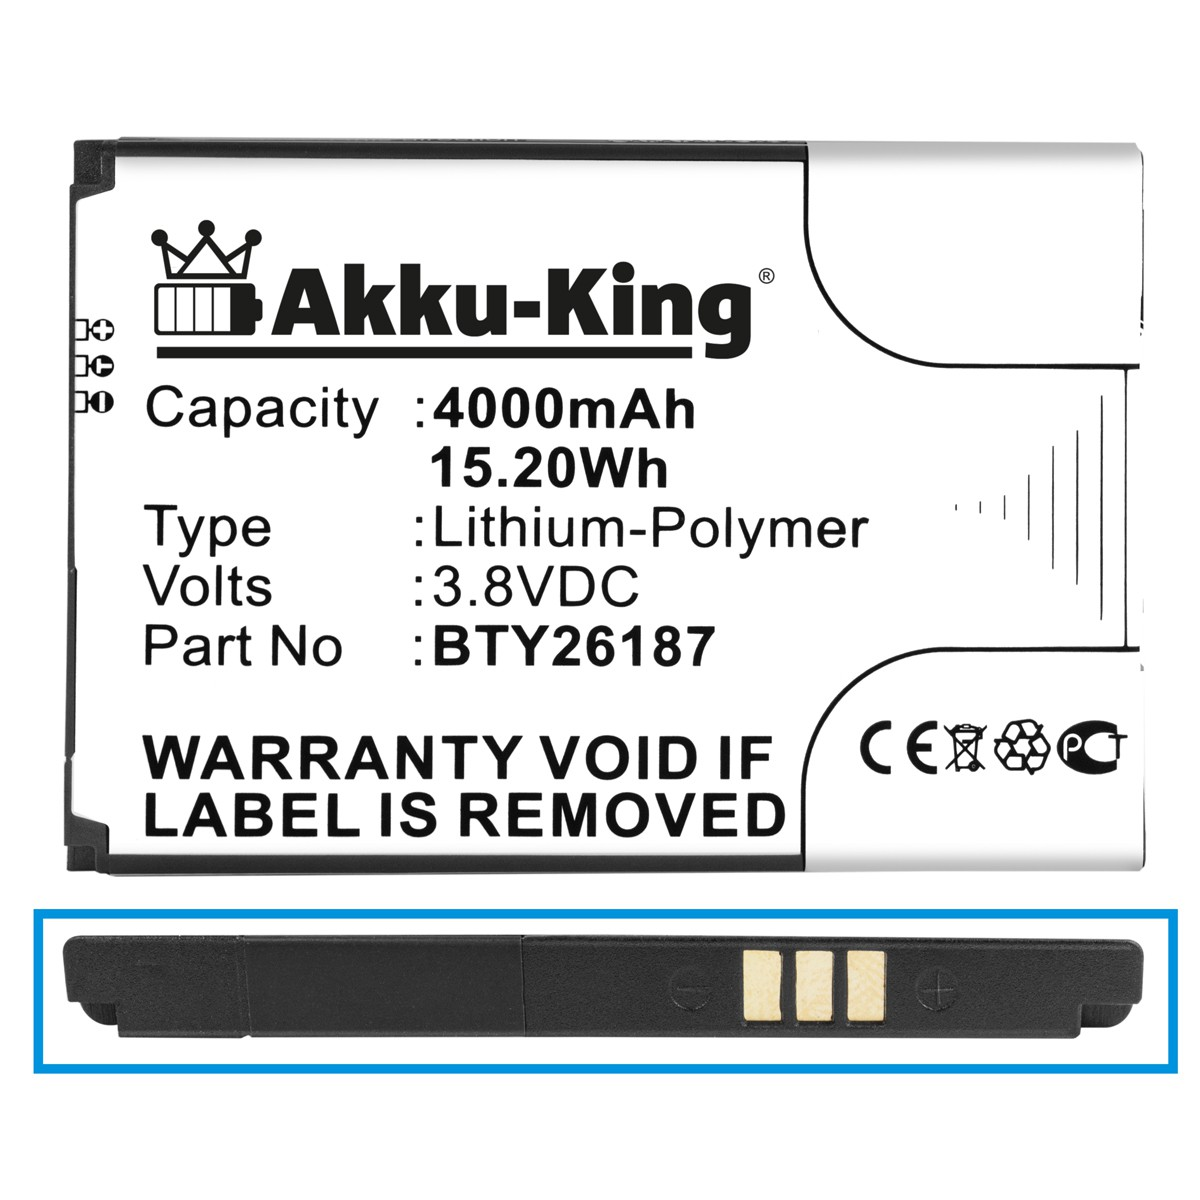 Mobistel AKKU-KING mit Akku 3.8 Li-Polymer Volt, 4000mAh kompatibel Handy-Akku, BTY26187